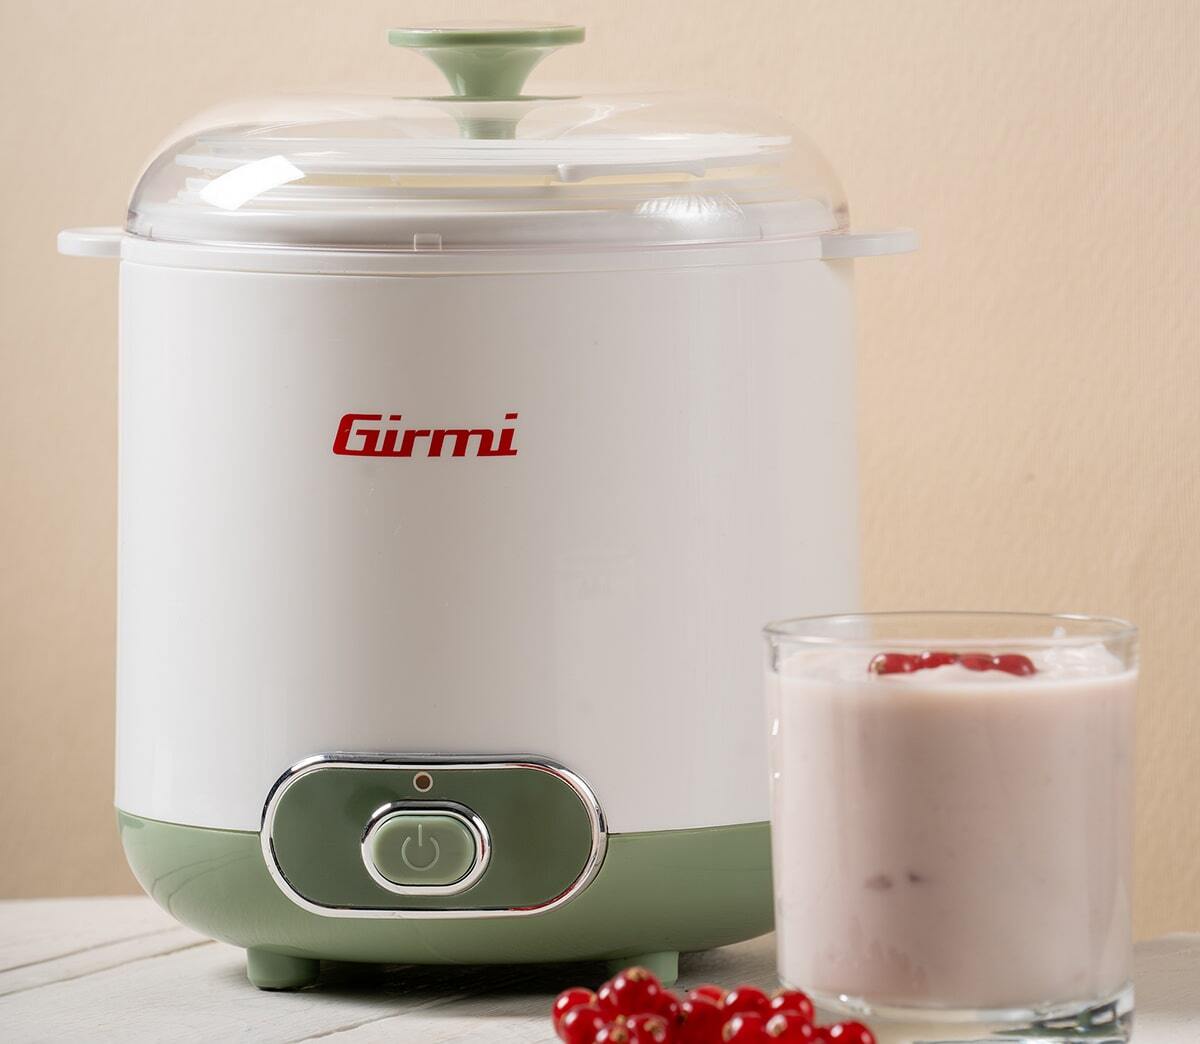 Girmi YG02 YOGURT MAKER for making home-made yogurt